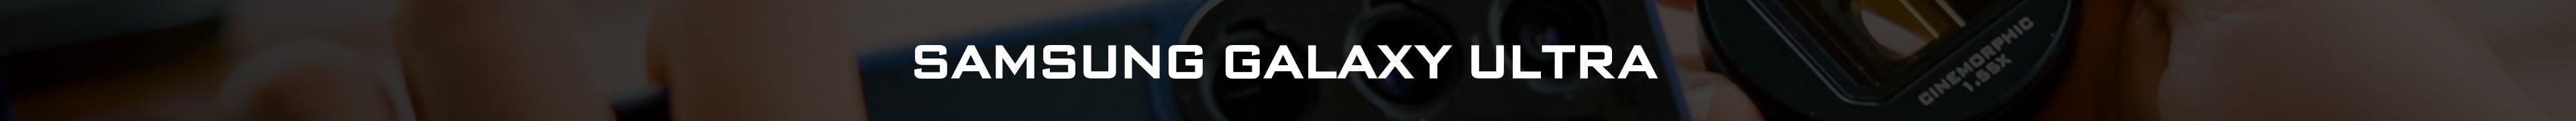 Samsung Galaxy Ultra 렌즈 키트: ND, CPL, Anamorphic 등